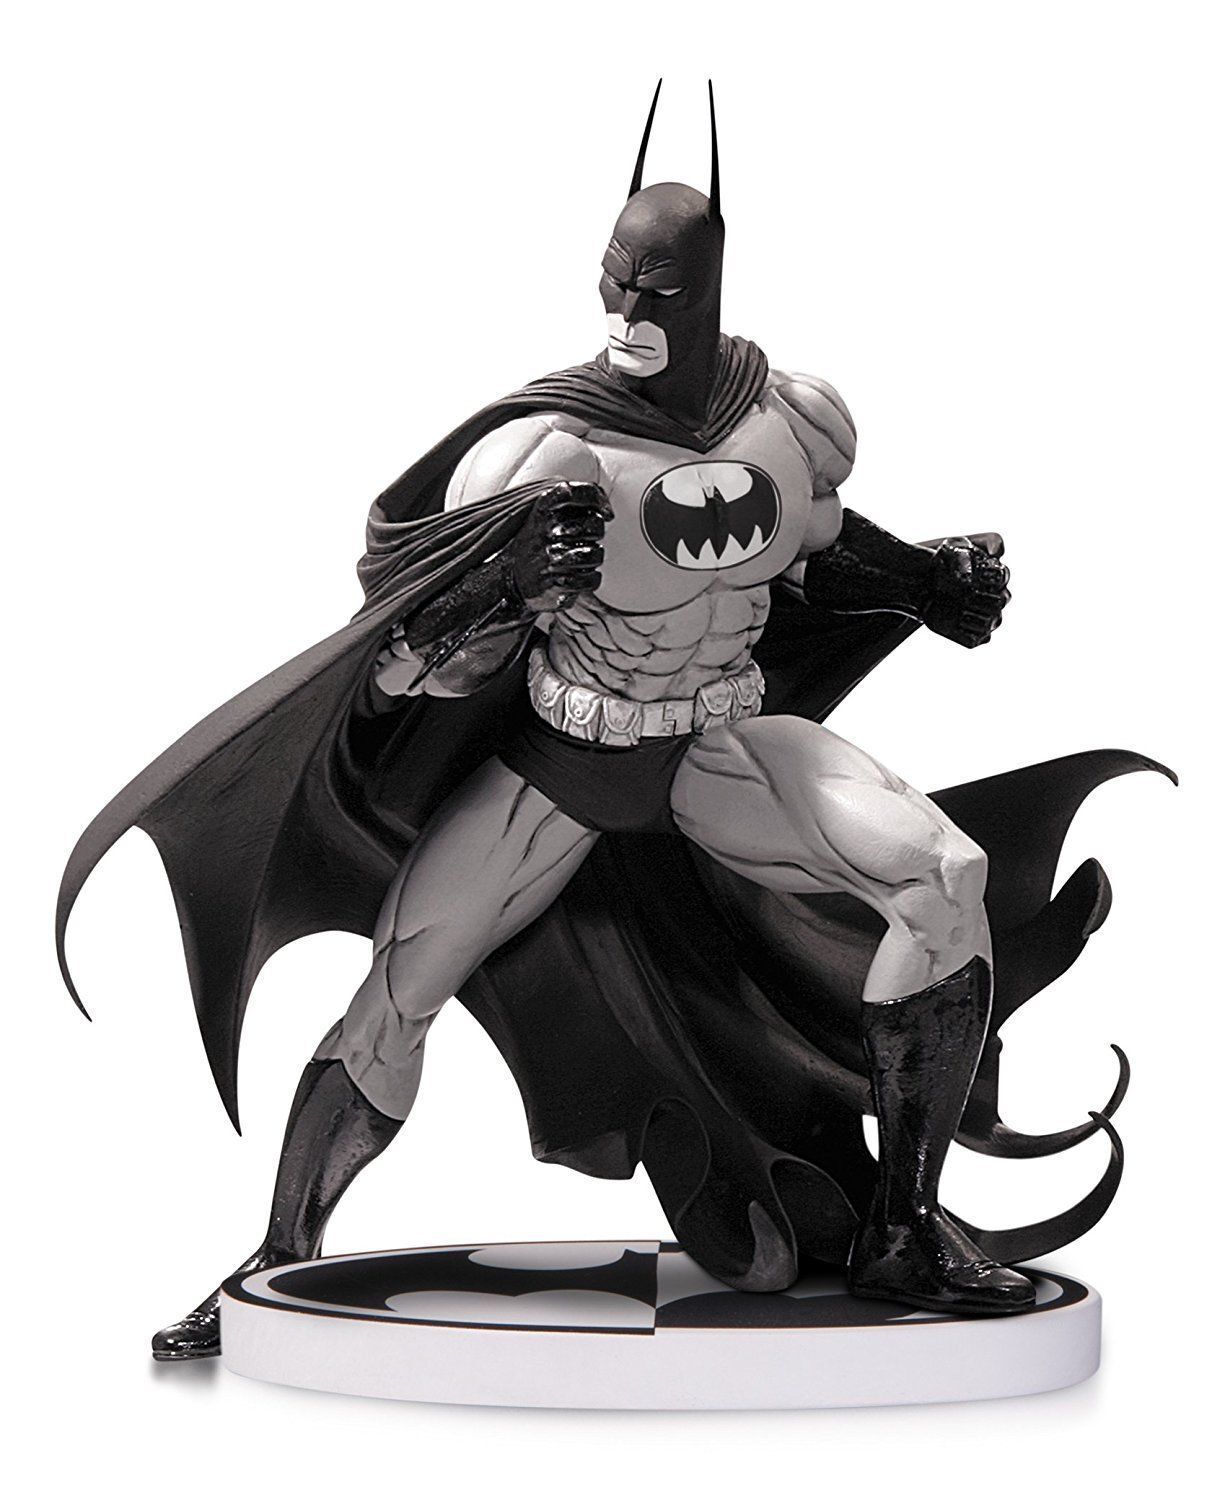 Batman Black and White statue by Tim Sale